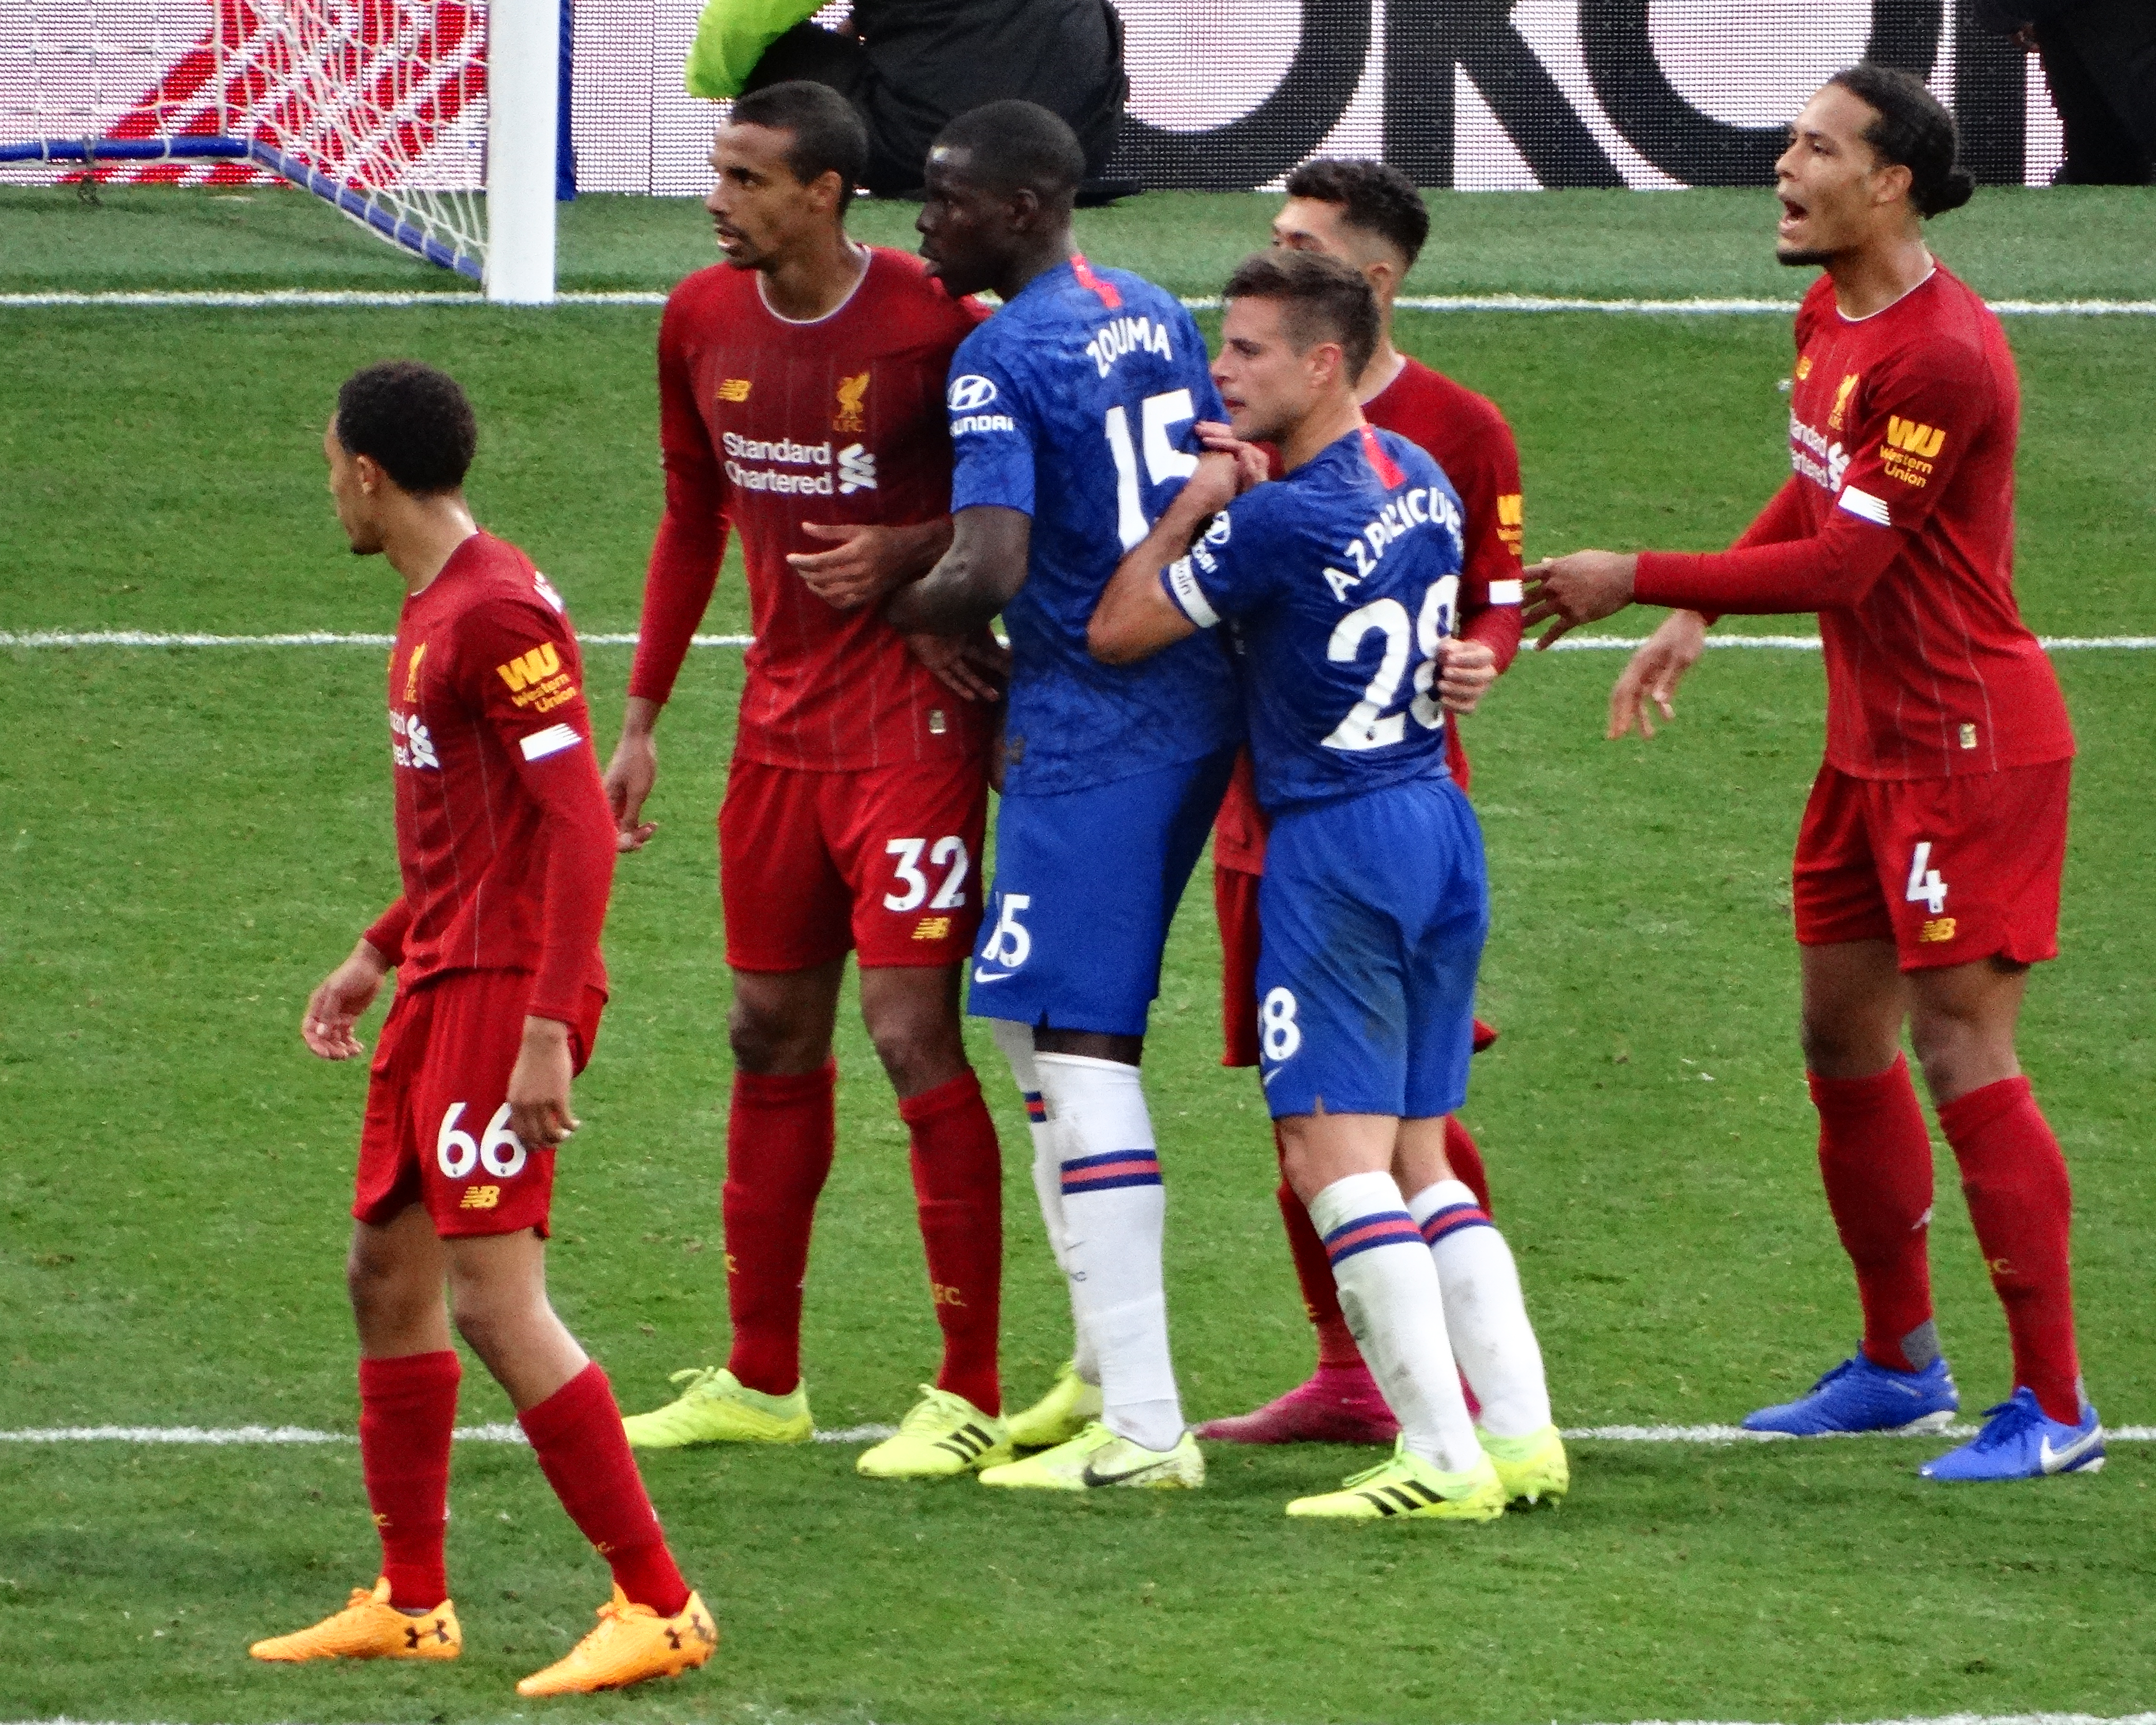 File:Chelsea 1 Liverpool 2 (48782238673).jpg - Wikimedia Commons